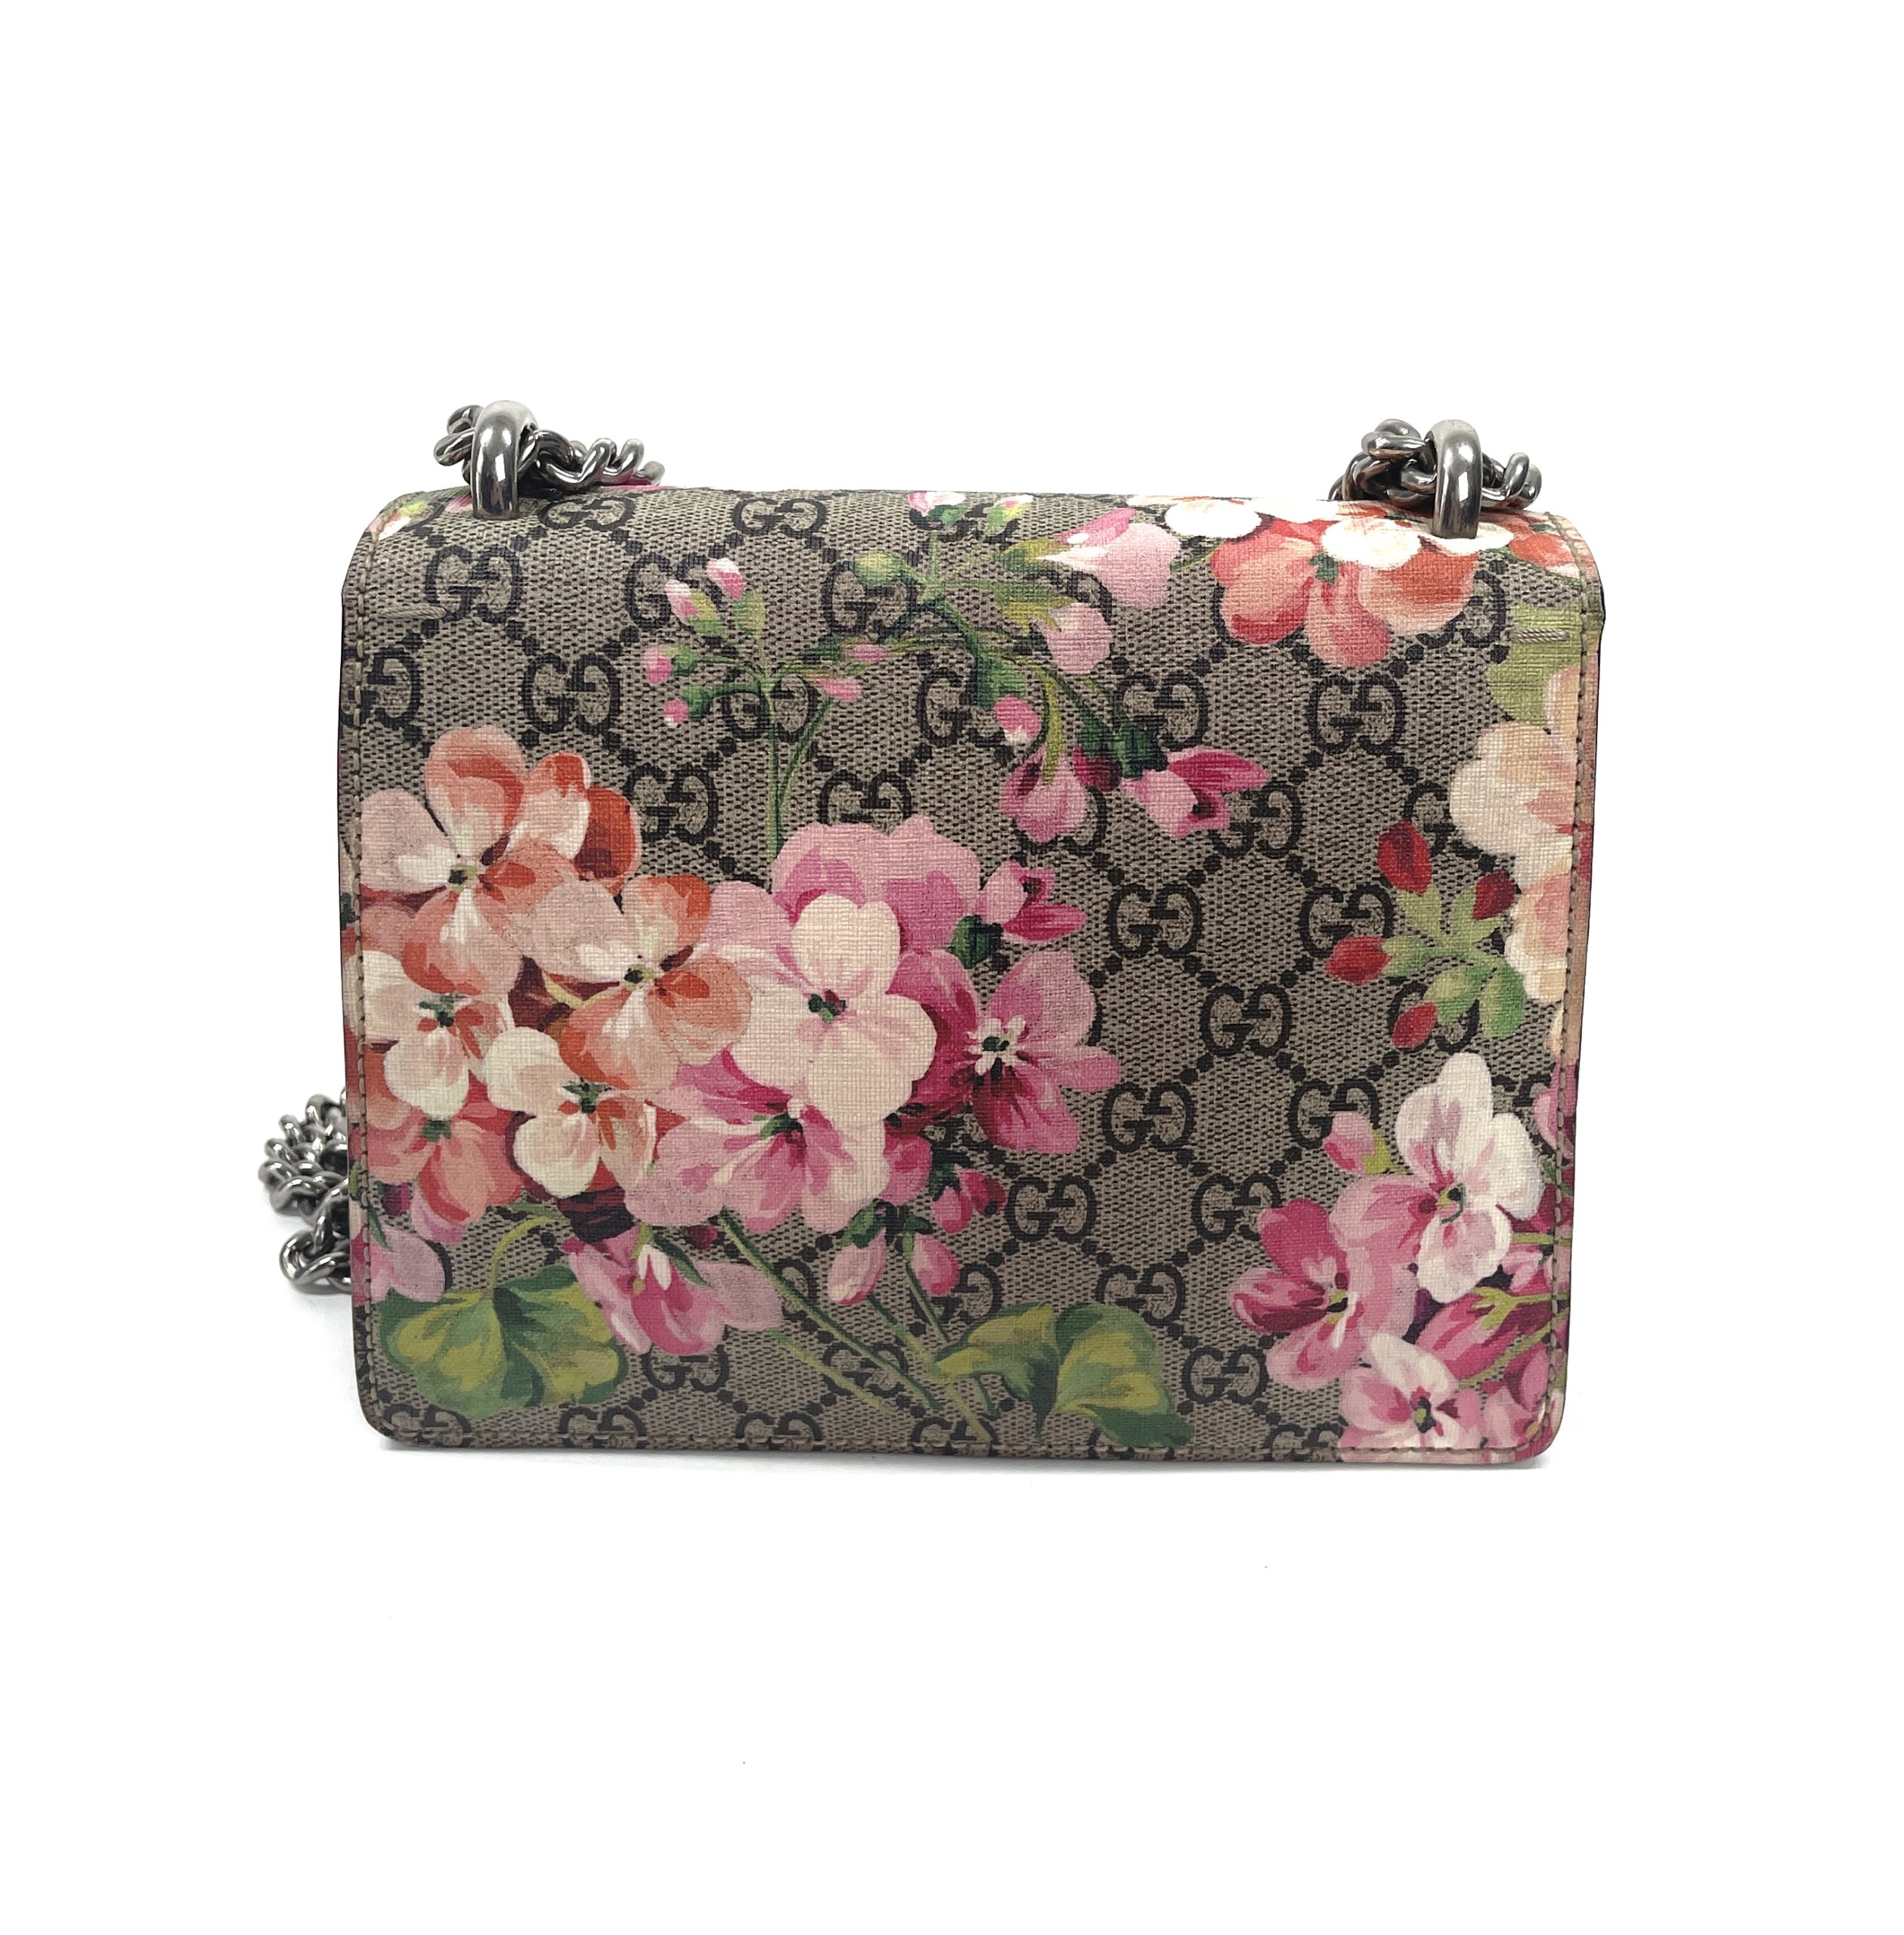 Gucci Dionysus Bag Blooms Print Coated Canvas Shoulder Bag - A Goods For You, LLC